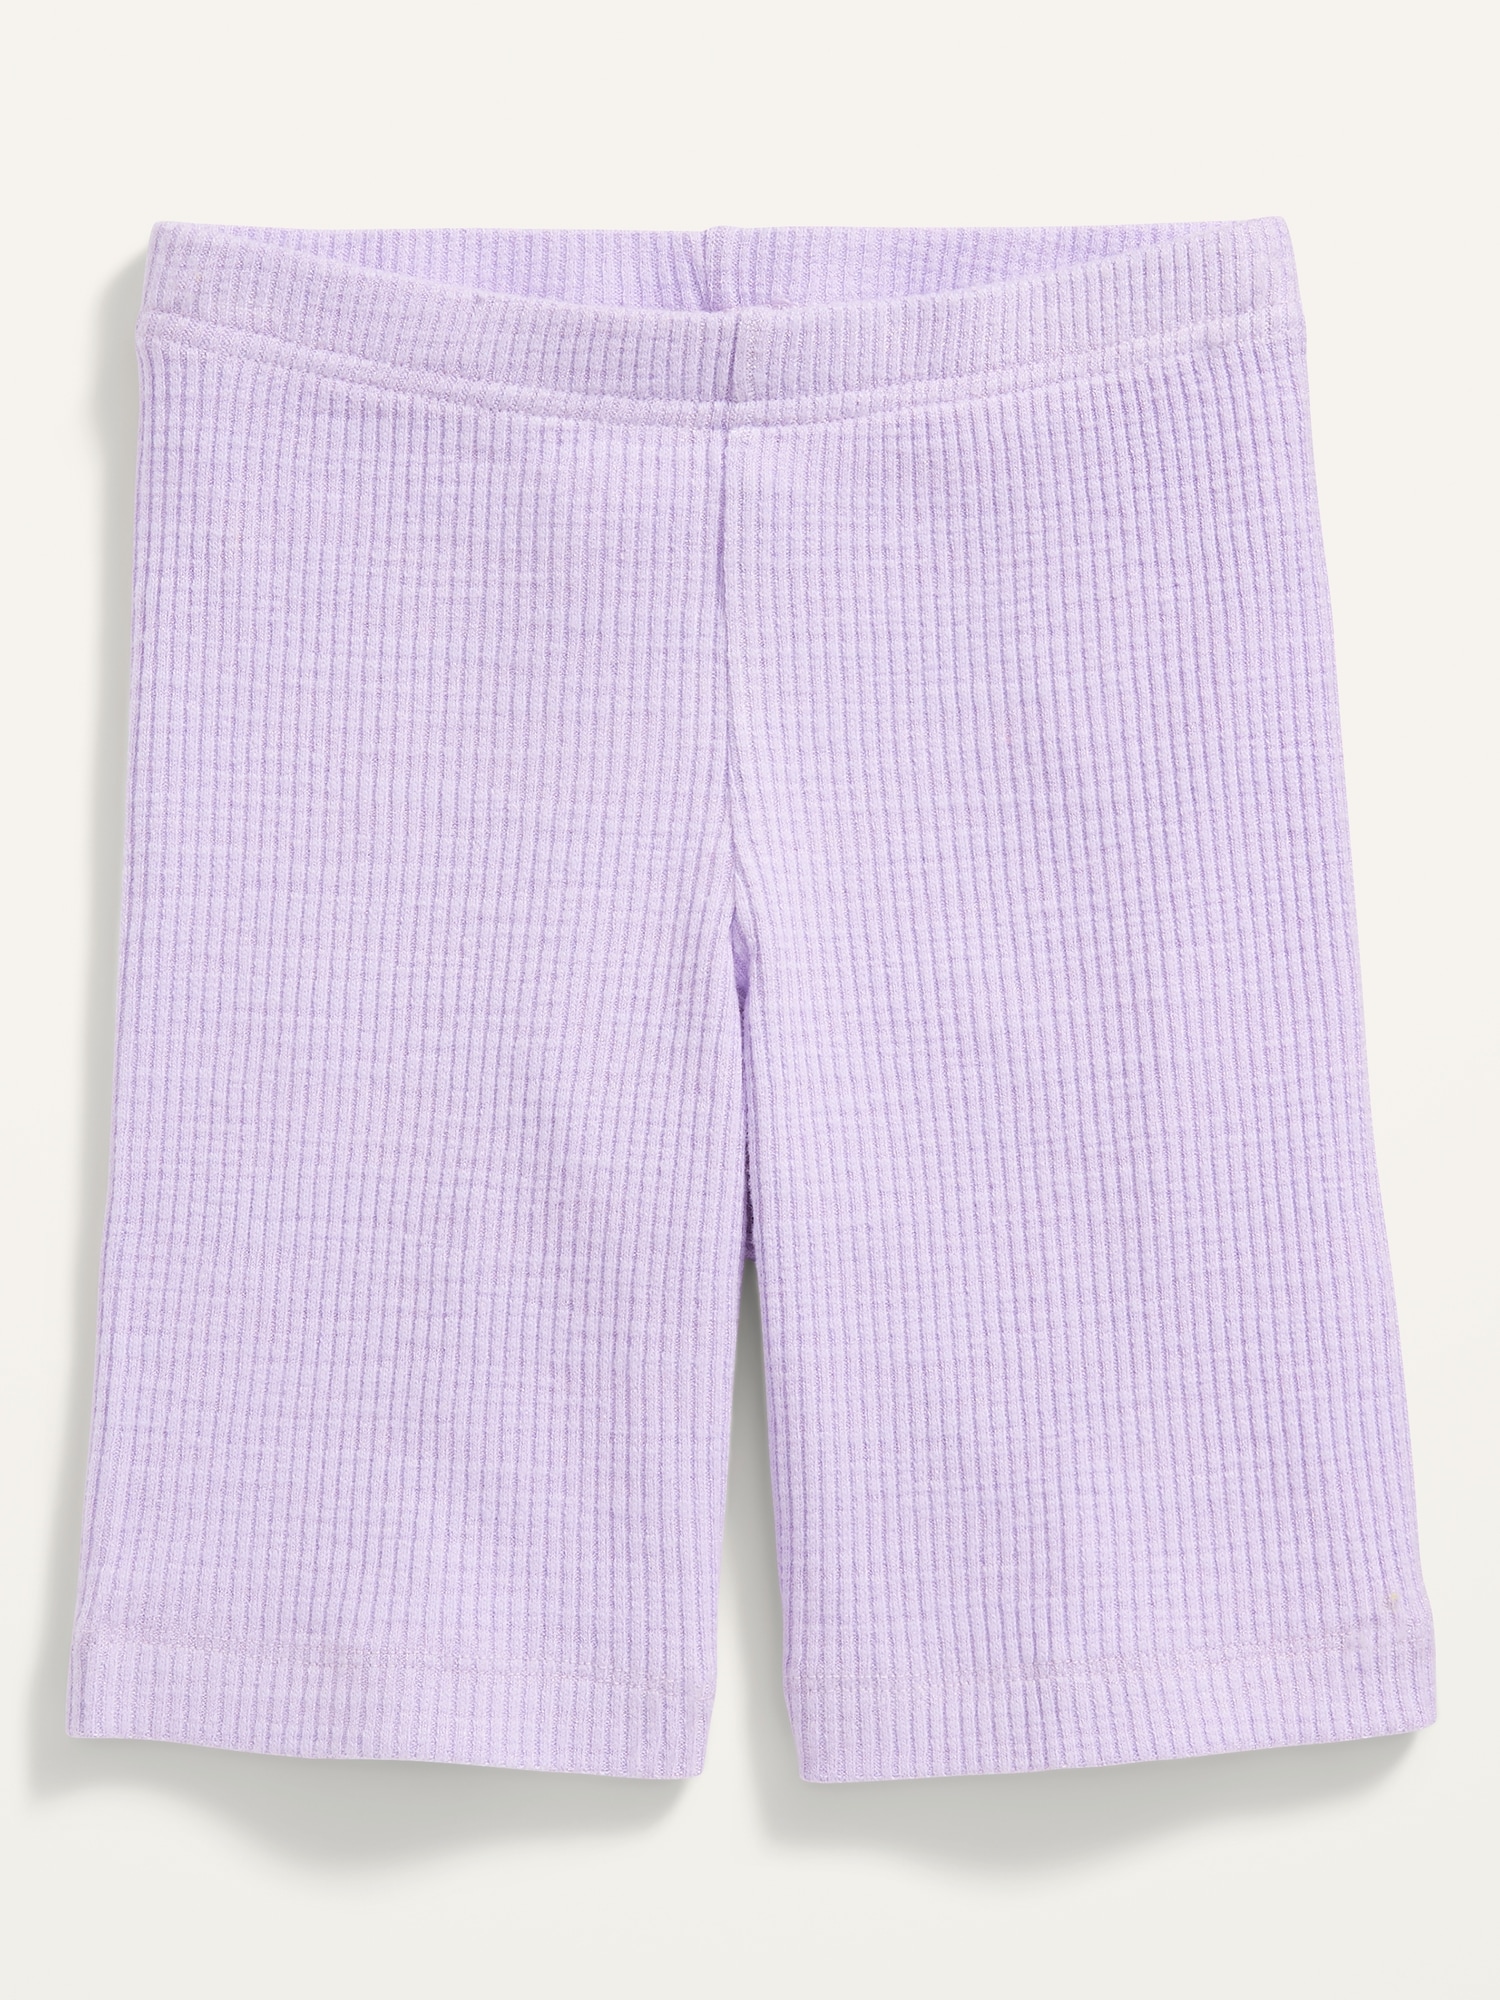 Purple Cotton Bike Shorts for Girls